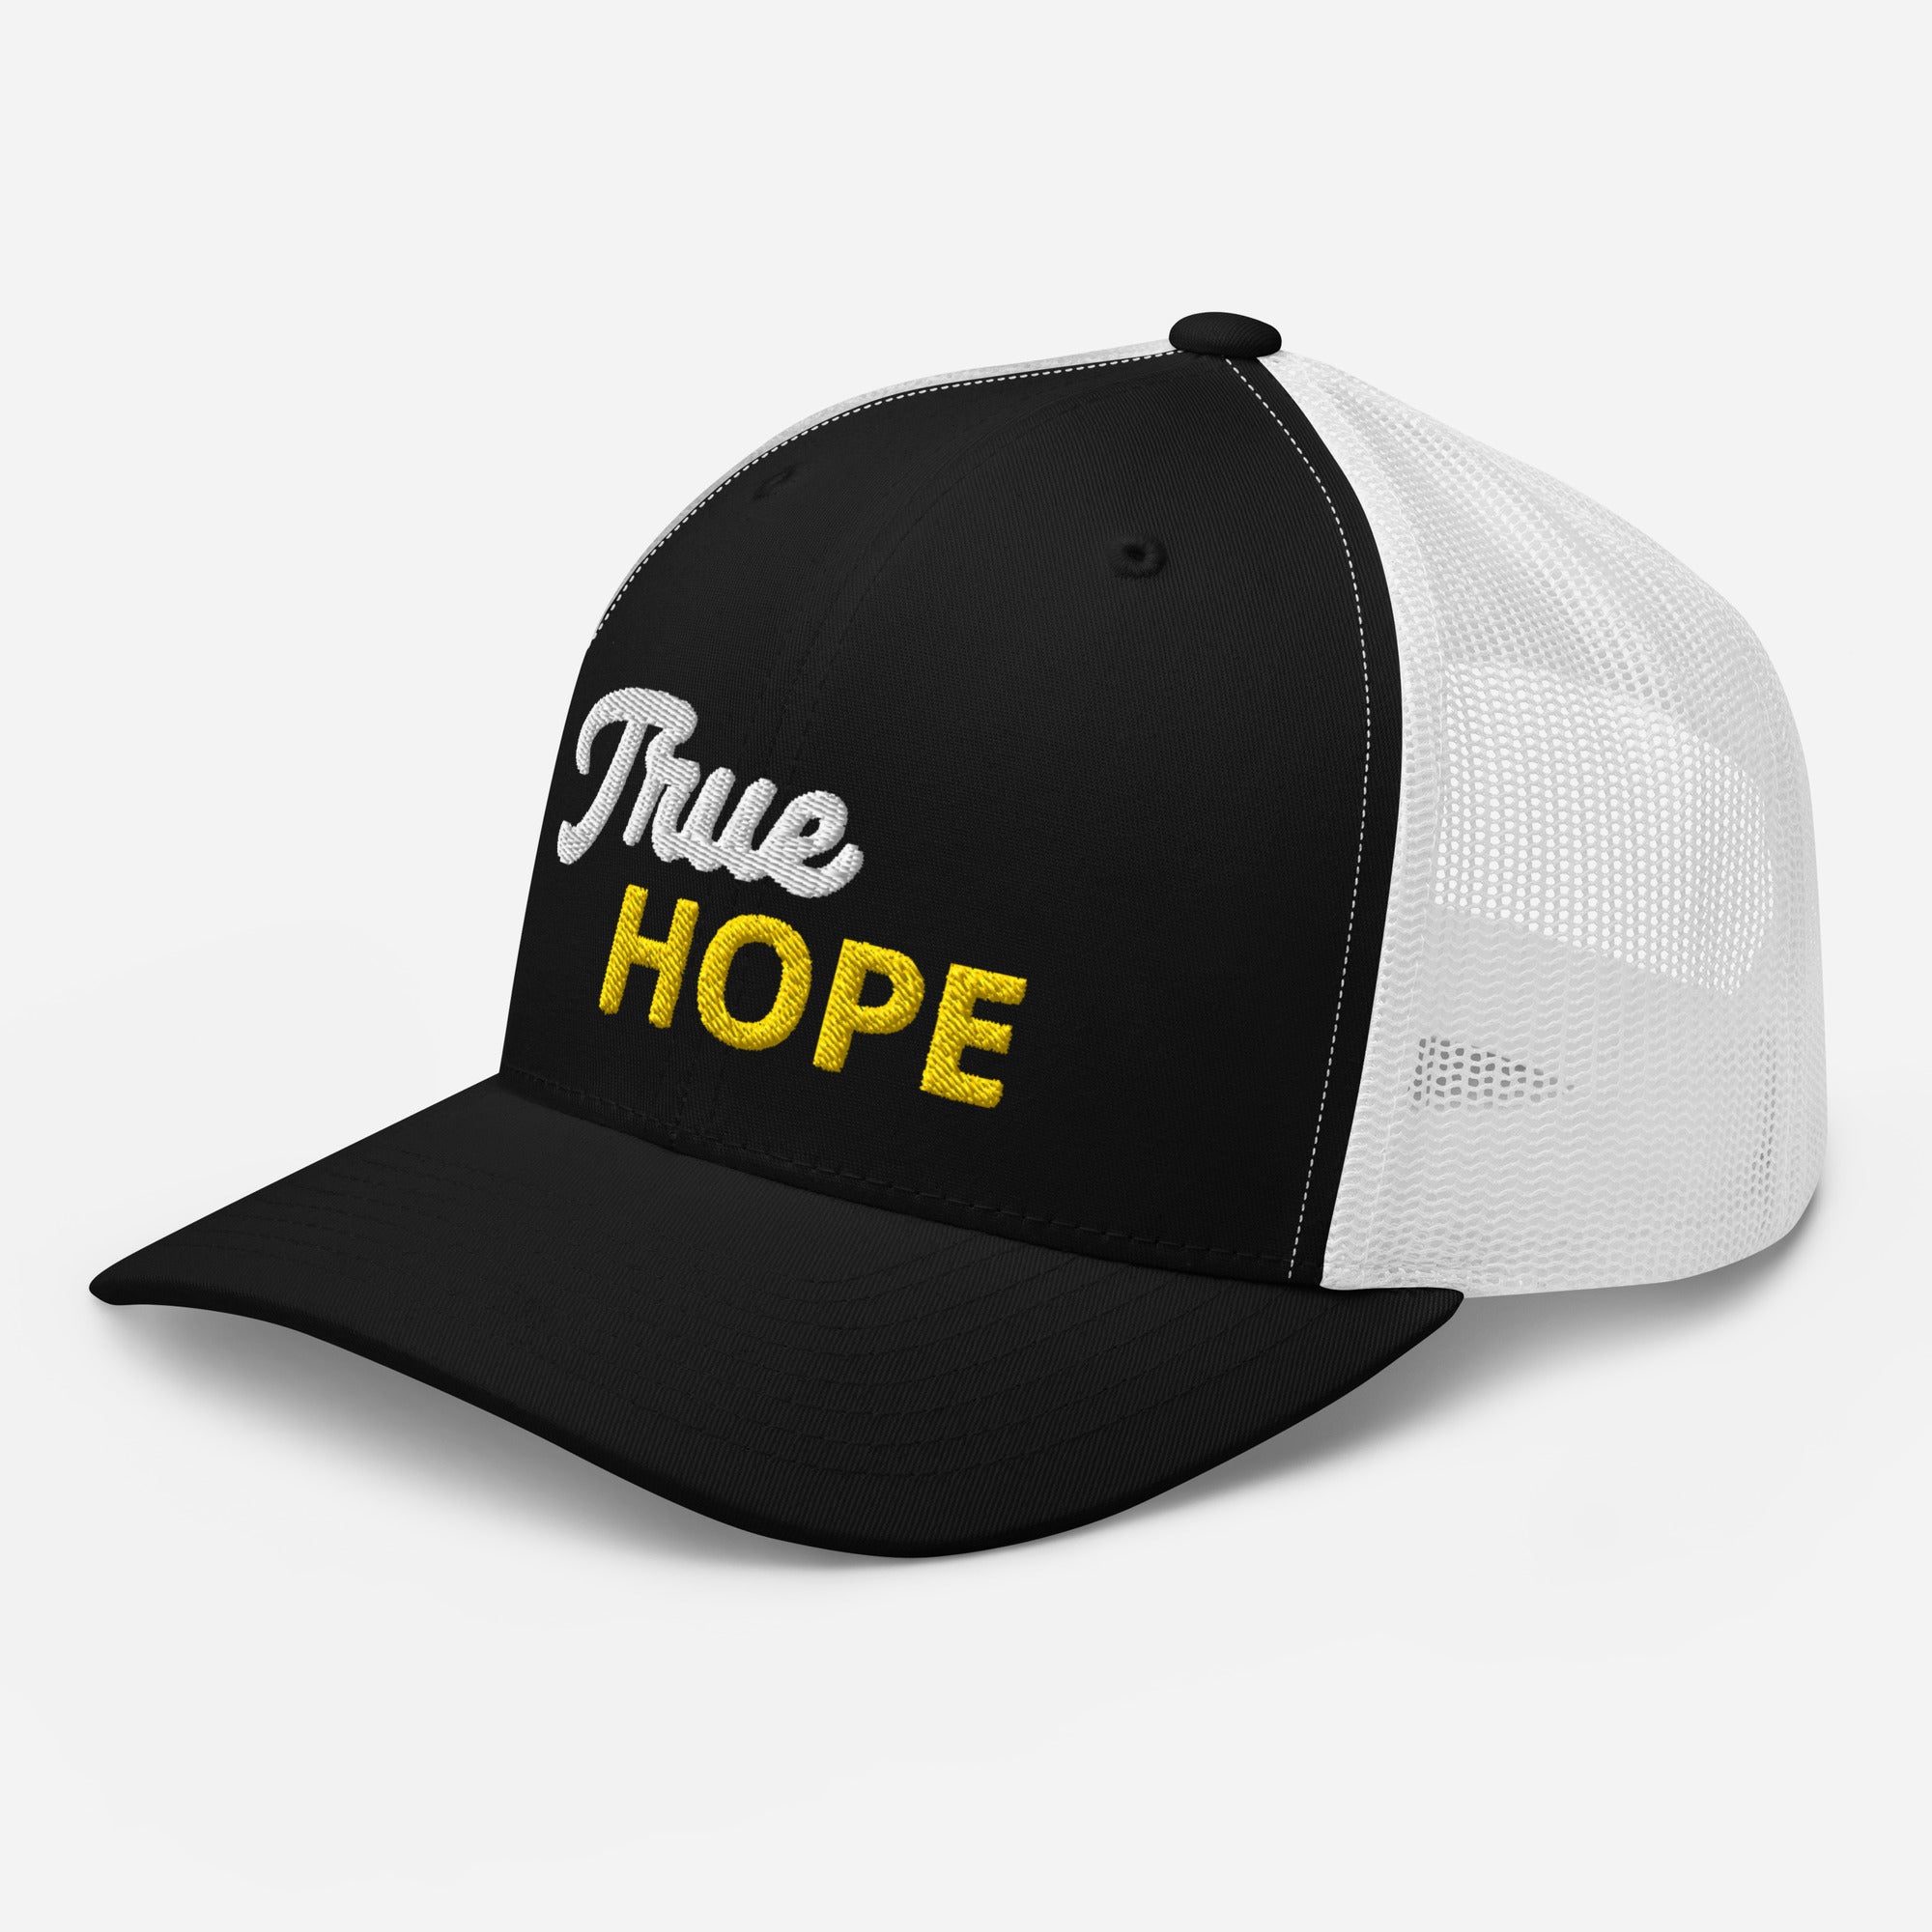 True Hope Mesh Trucker Hat